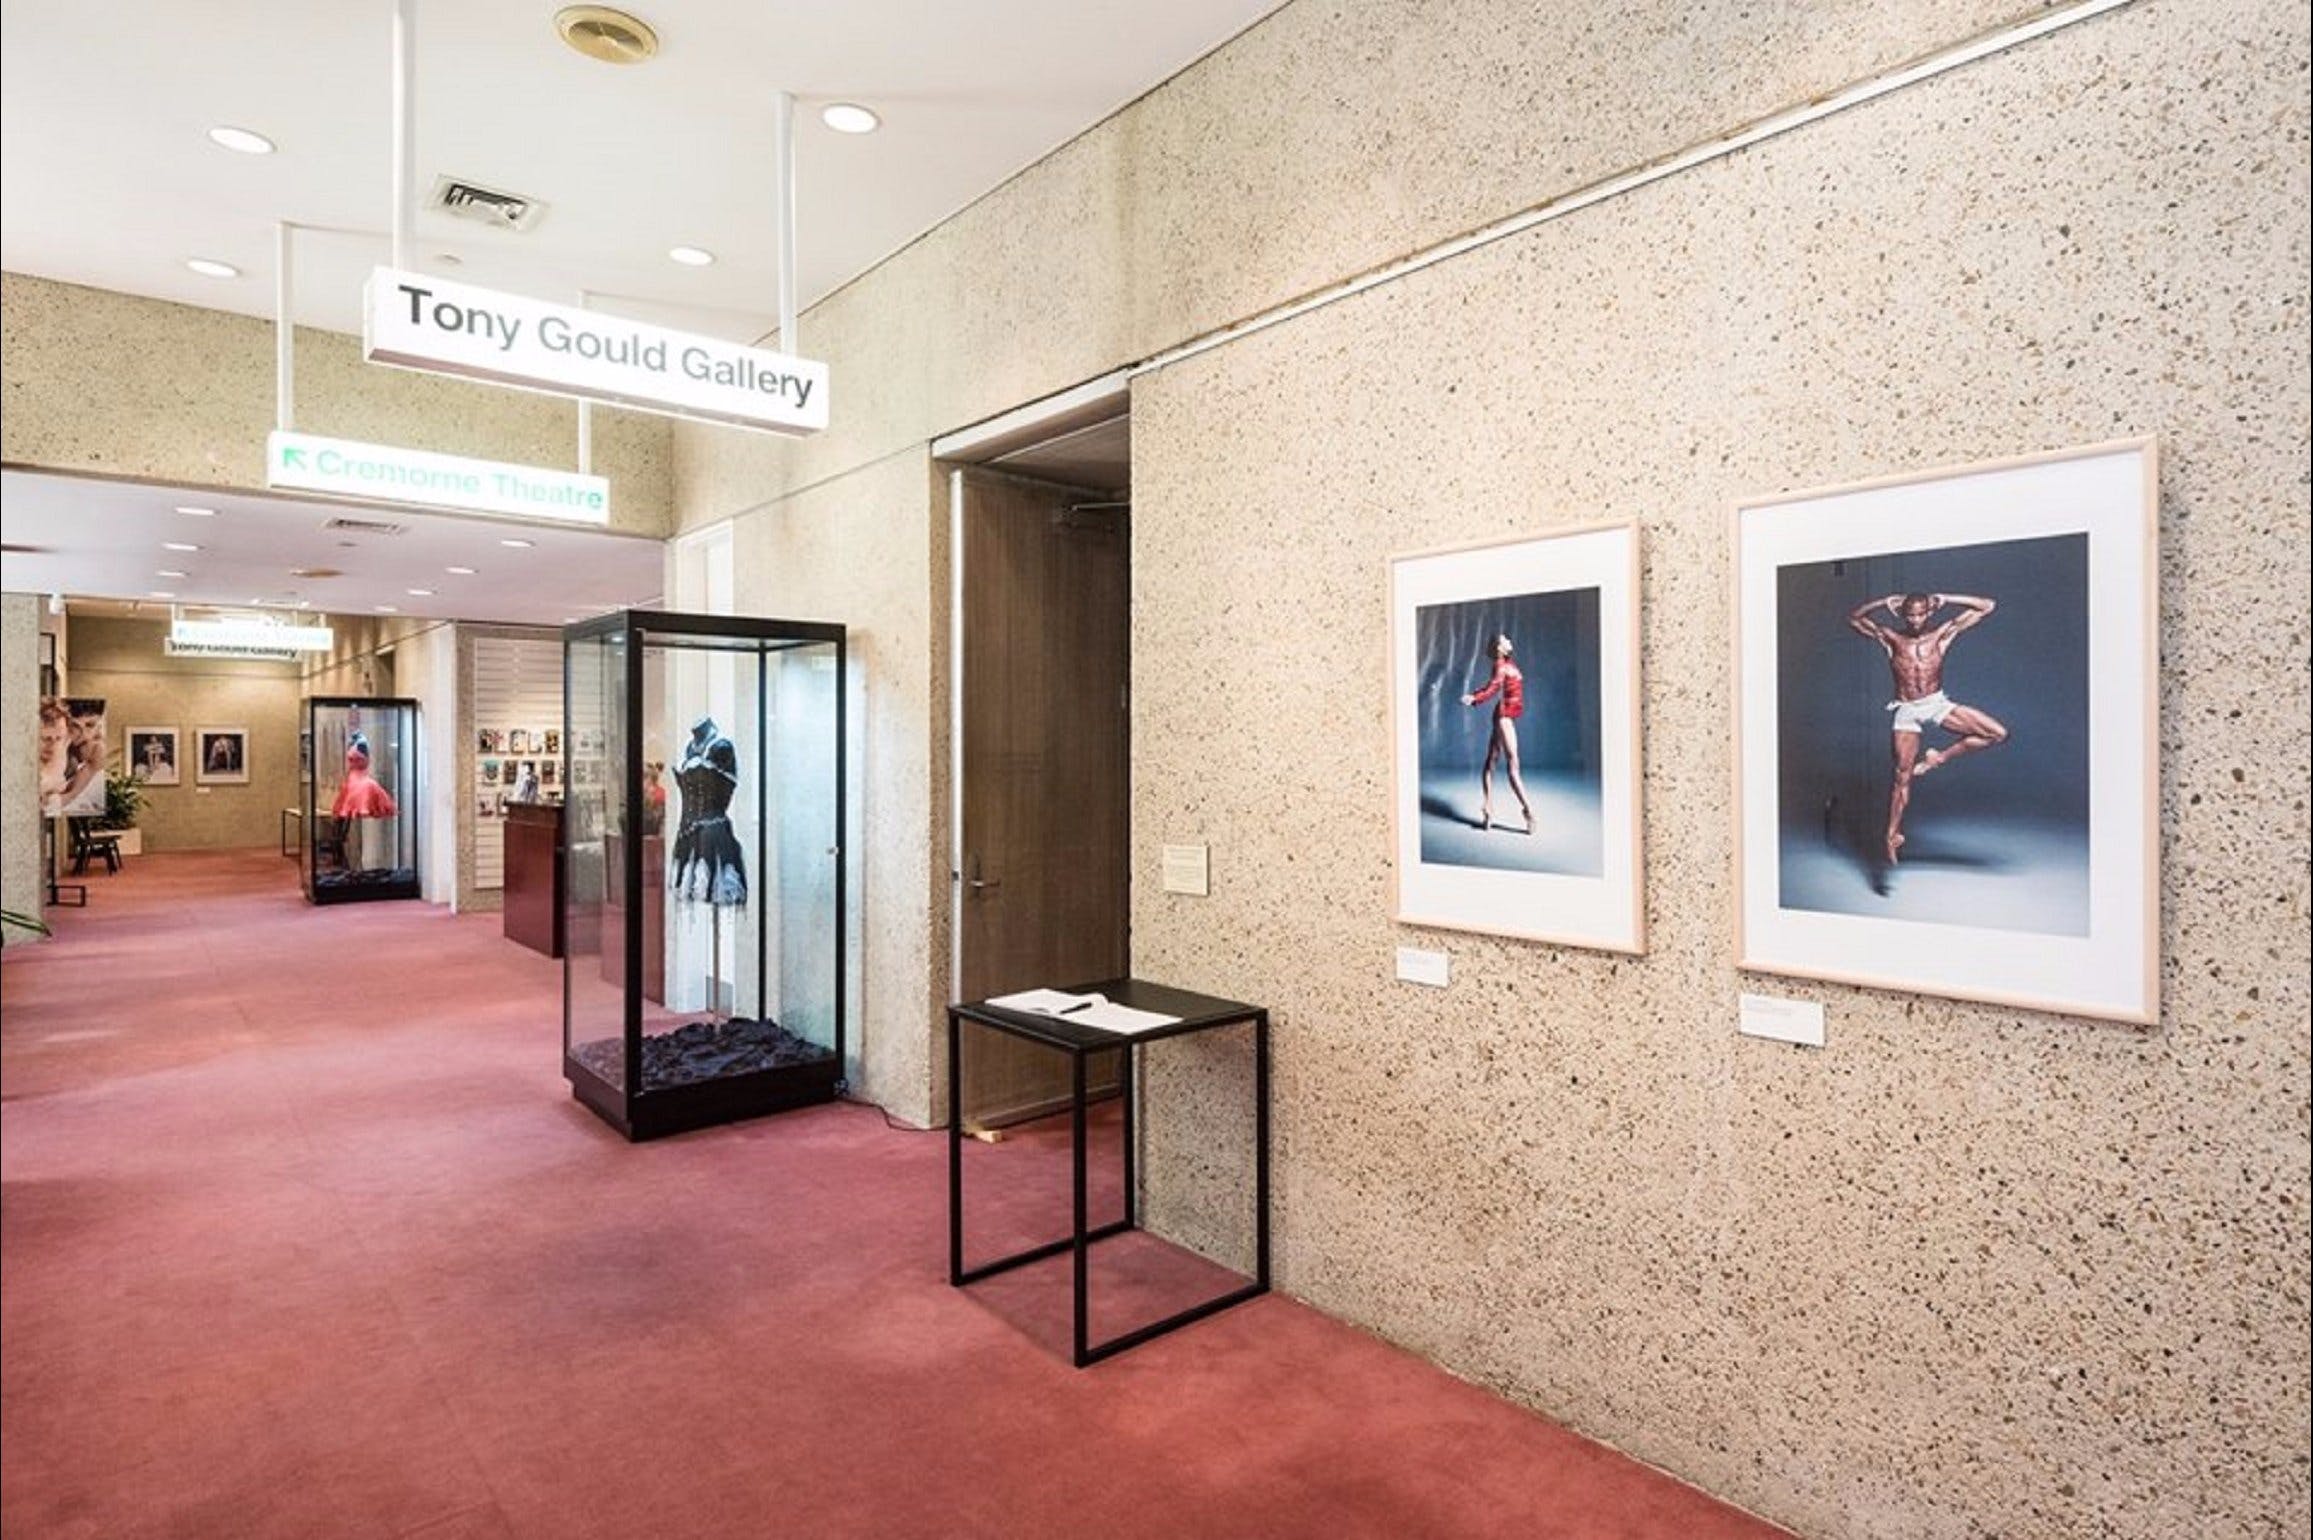 Tony Gould Gallery - Accommodation in Bendigo